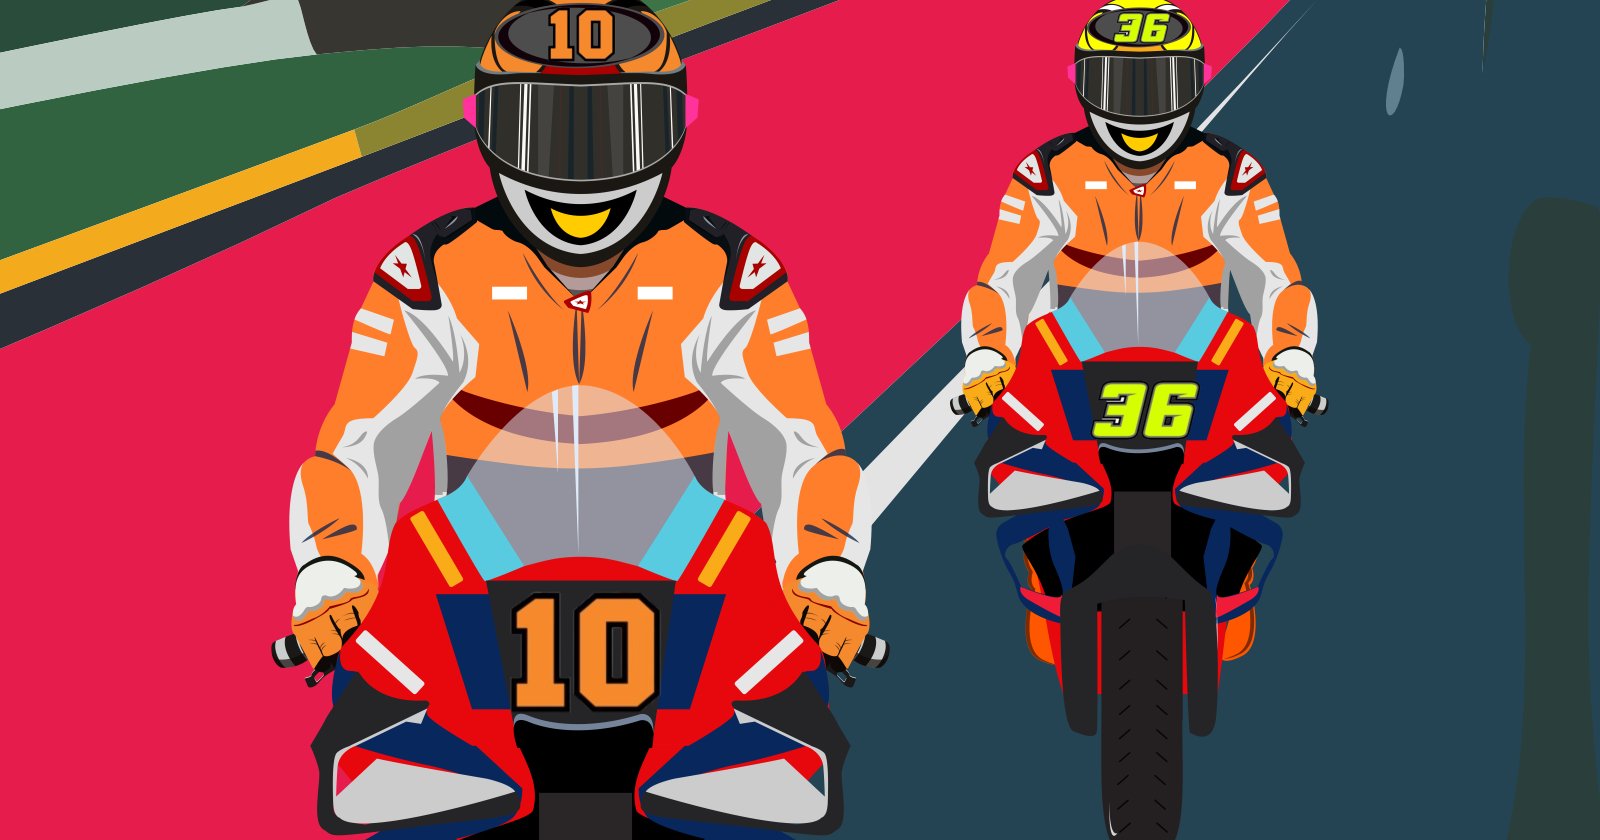 Jelang MotoGP Qatar, Motor Mir dan Marini Belum Siap